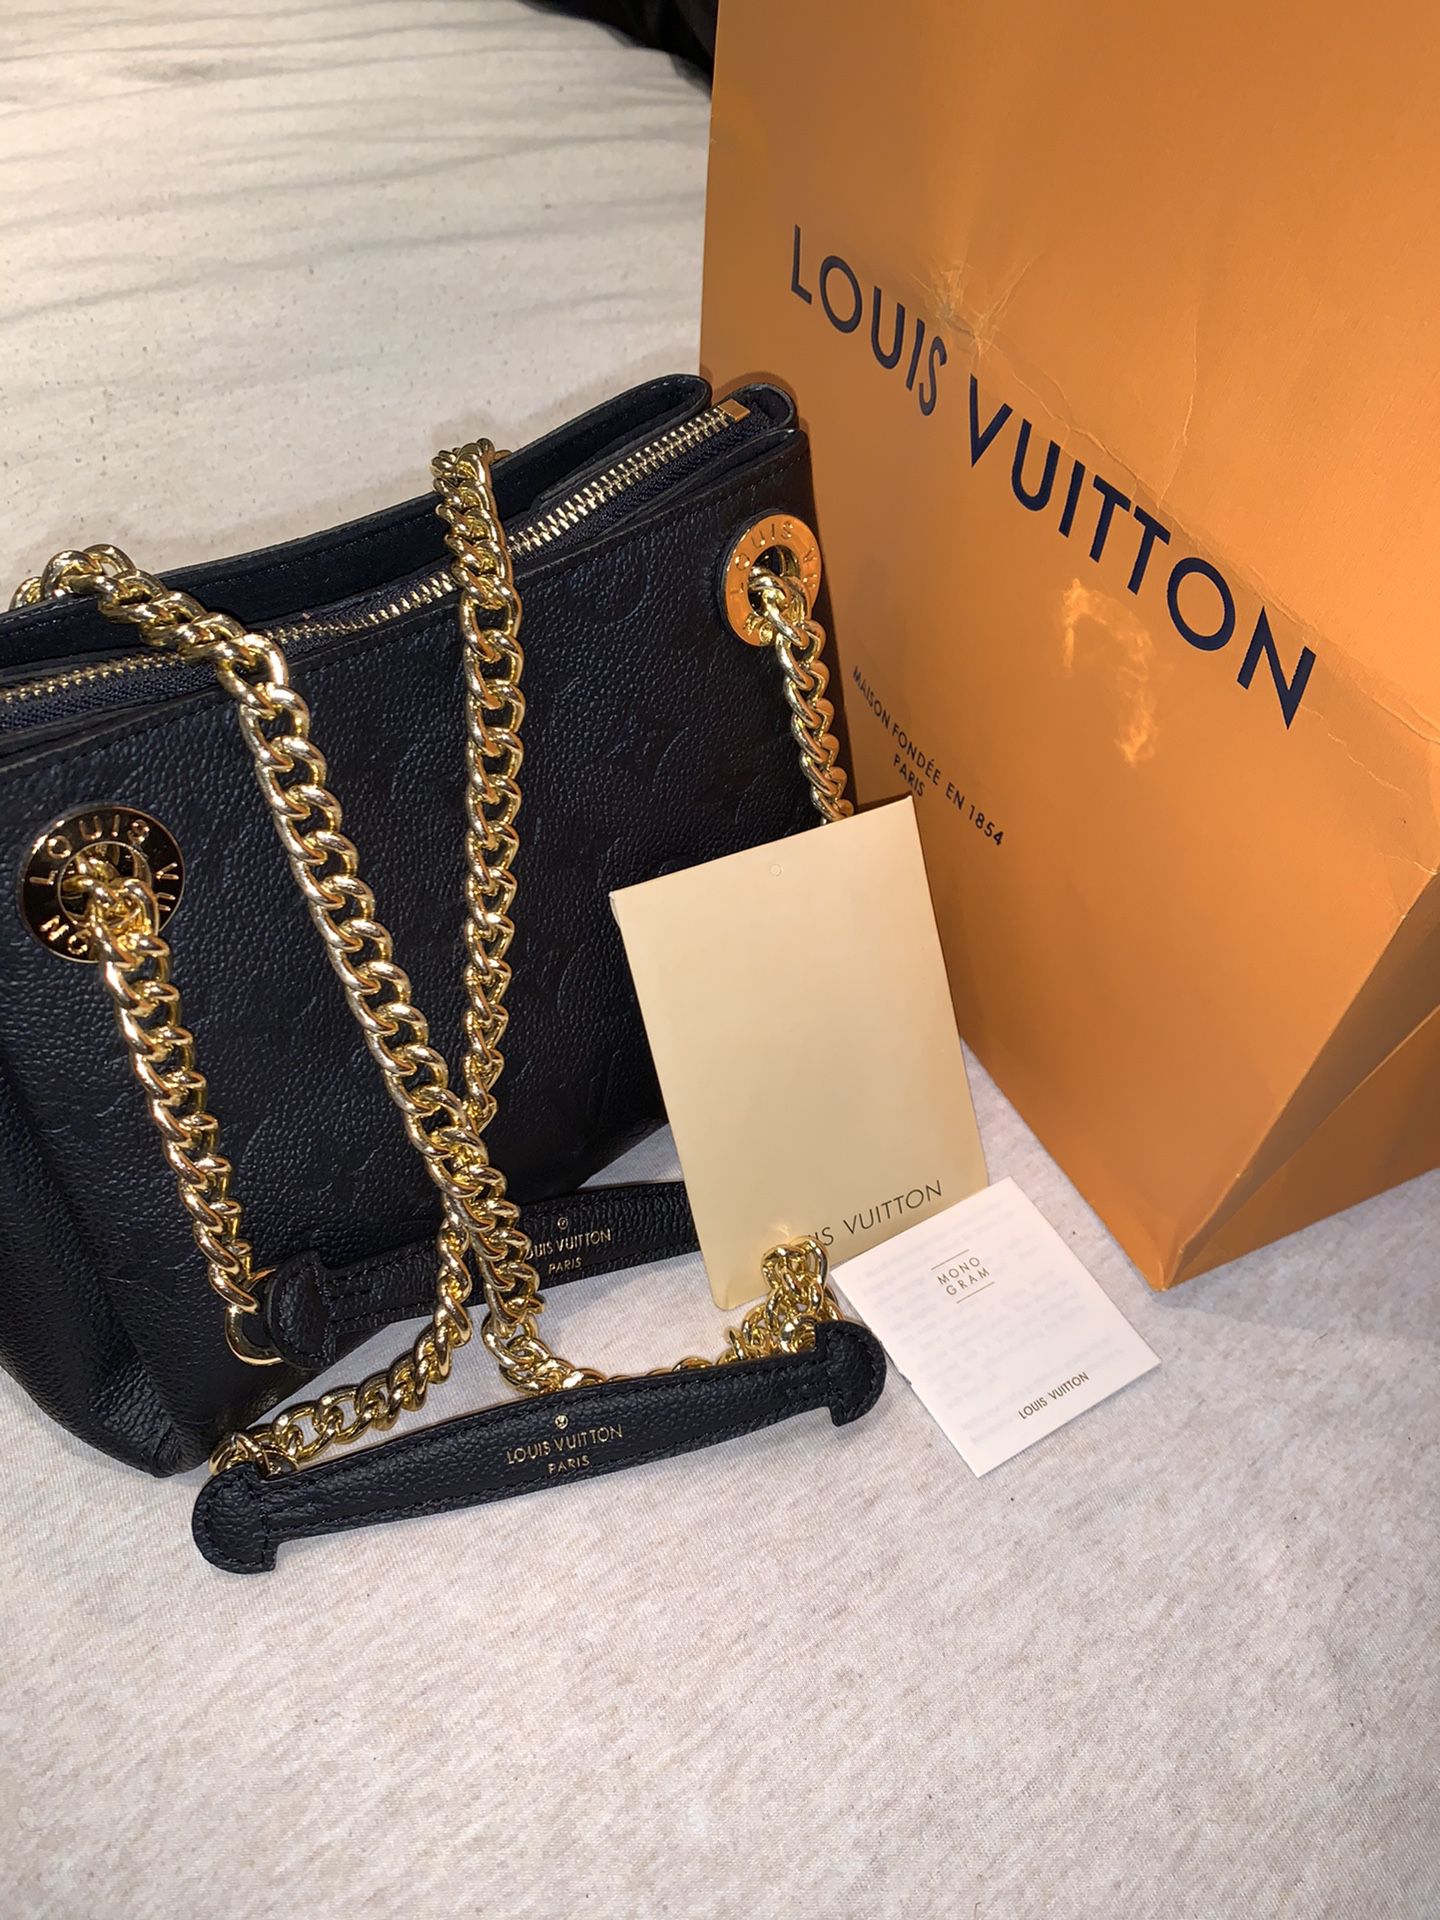 Women’s Louis Vuitton bag